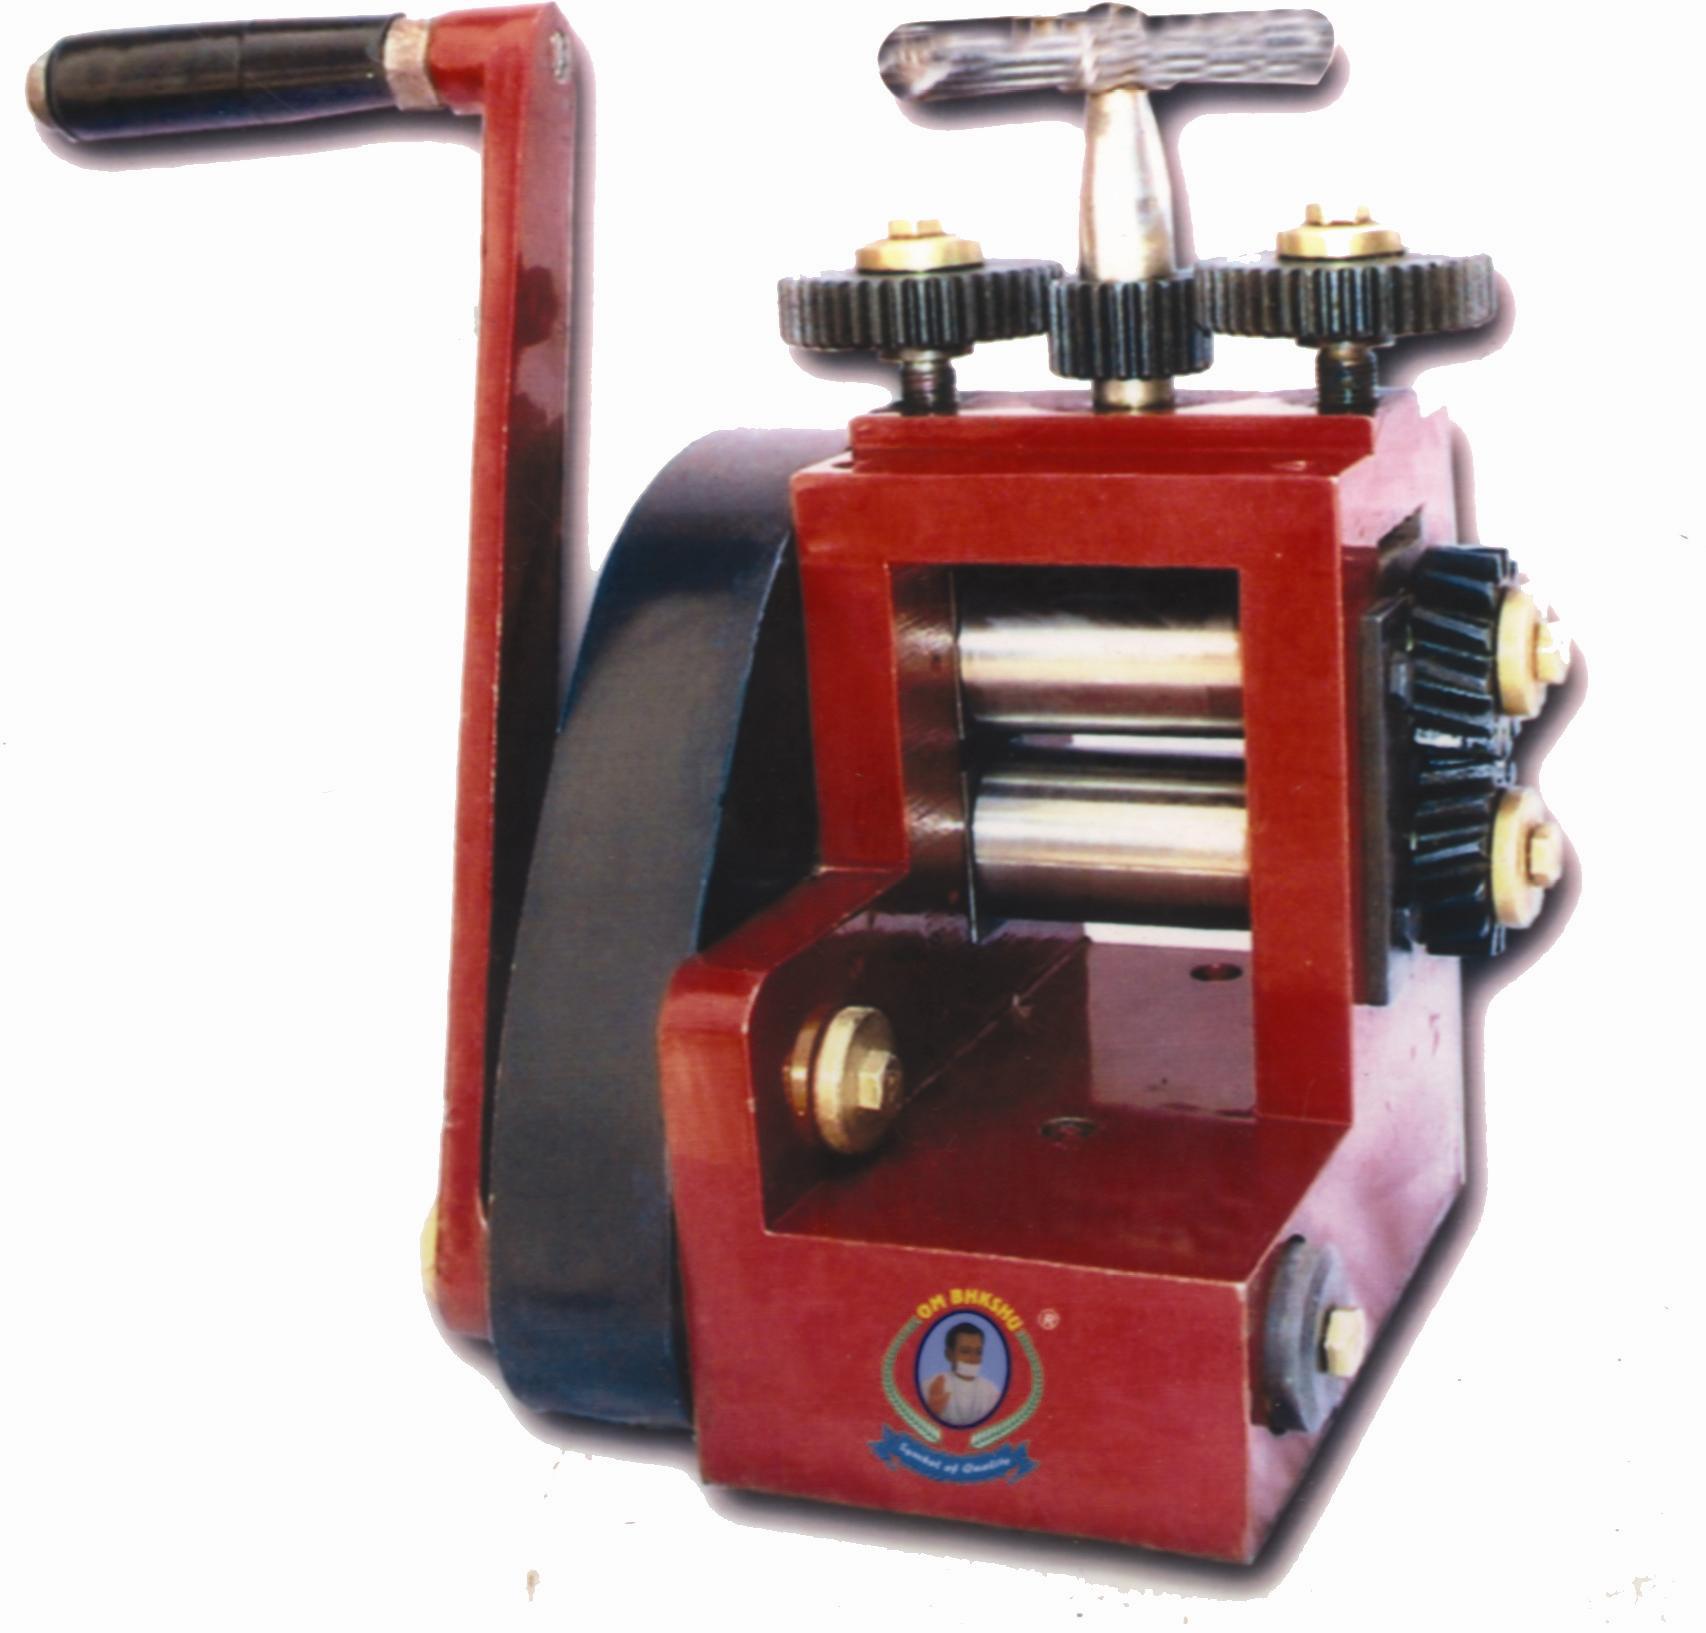 Mini Roll Press with Cover